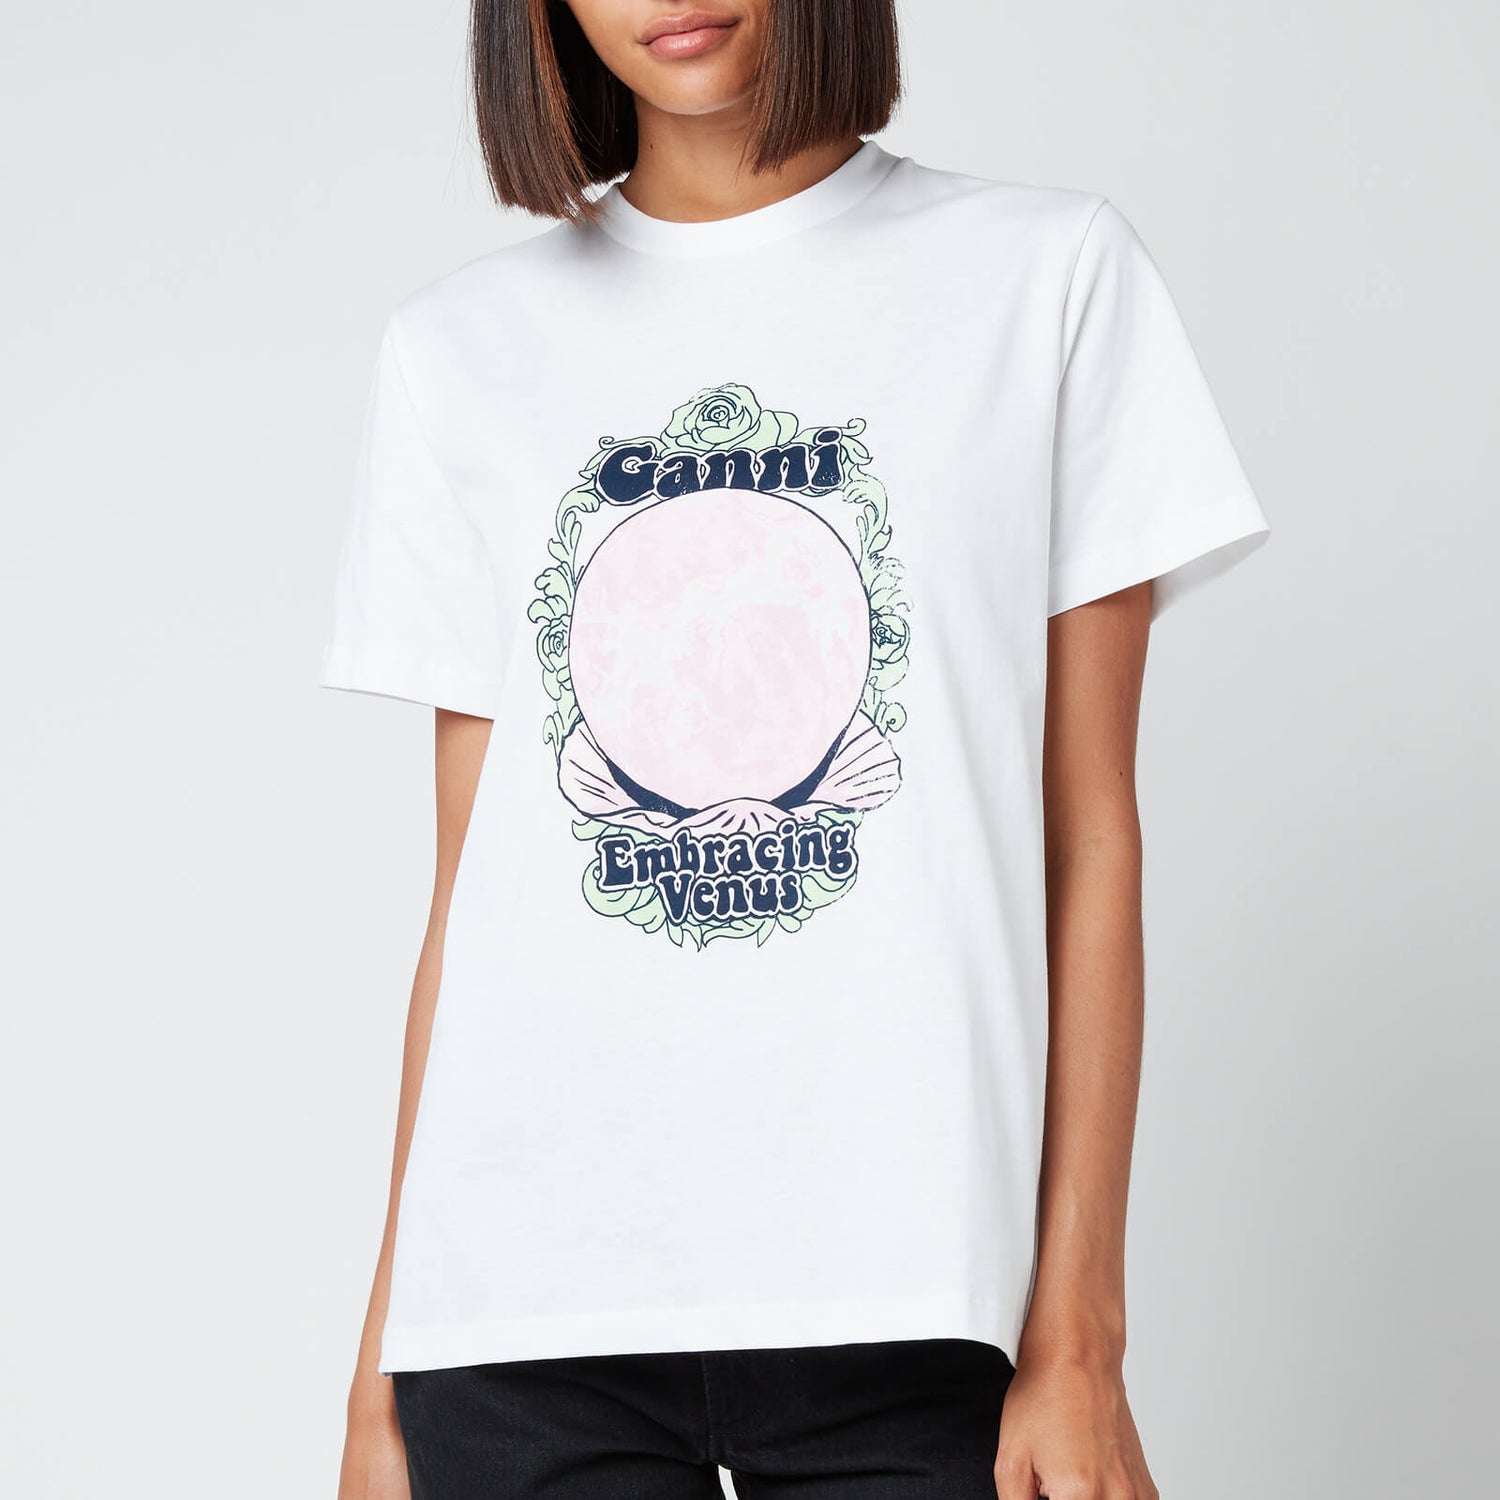 Ganni Women's Embracing Venus T-Shirt - In Bright White